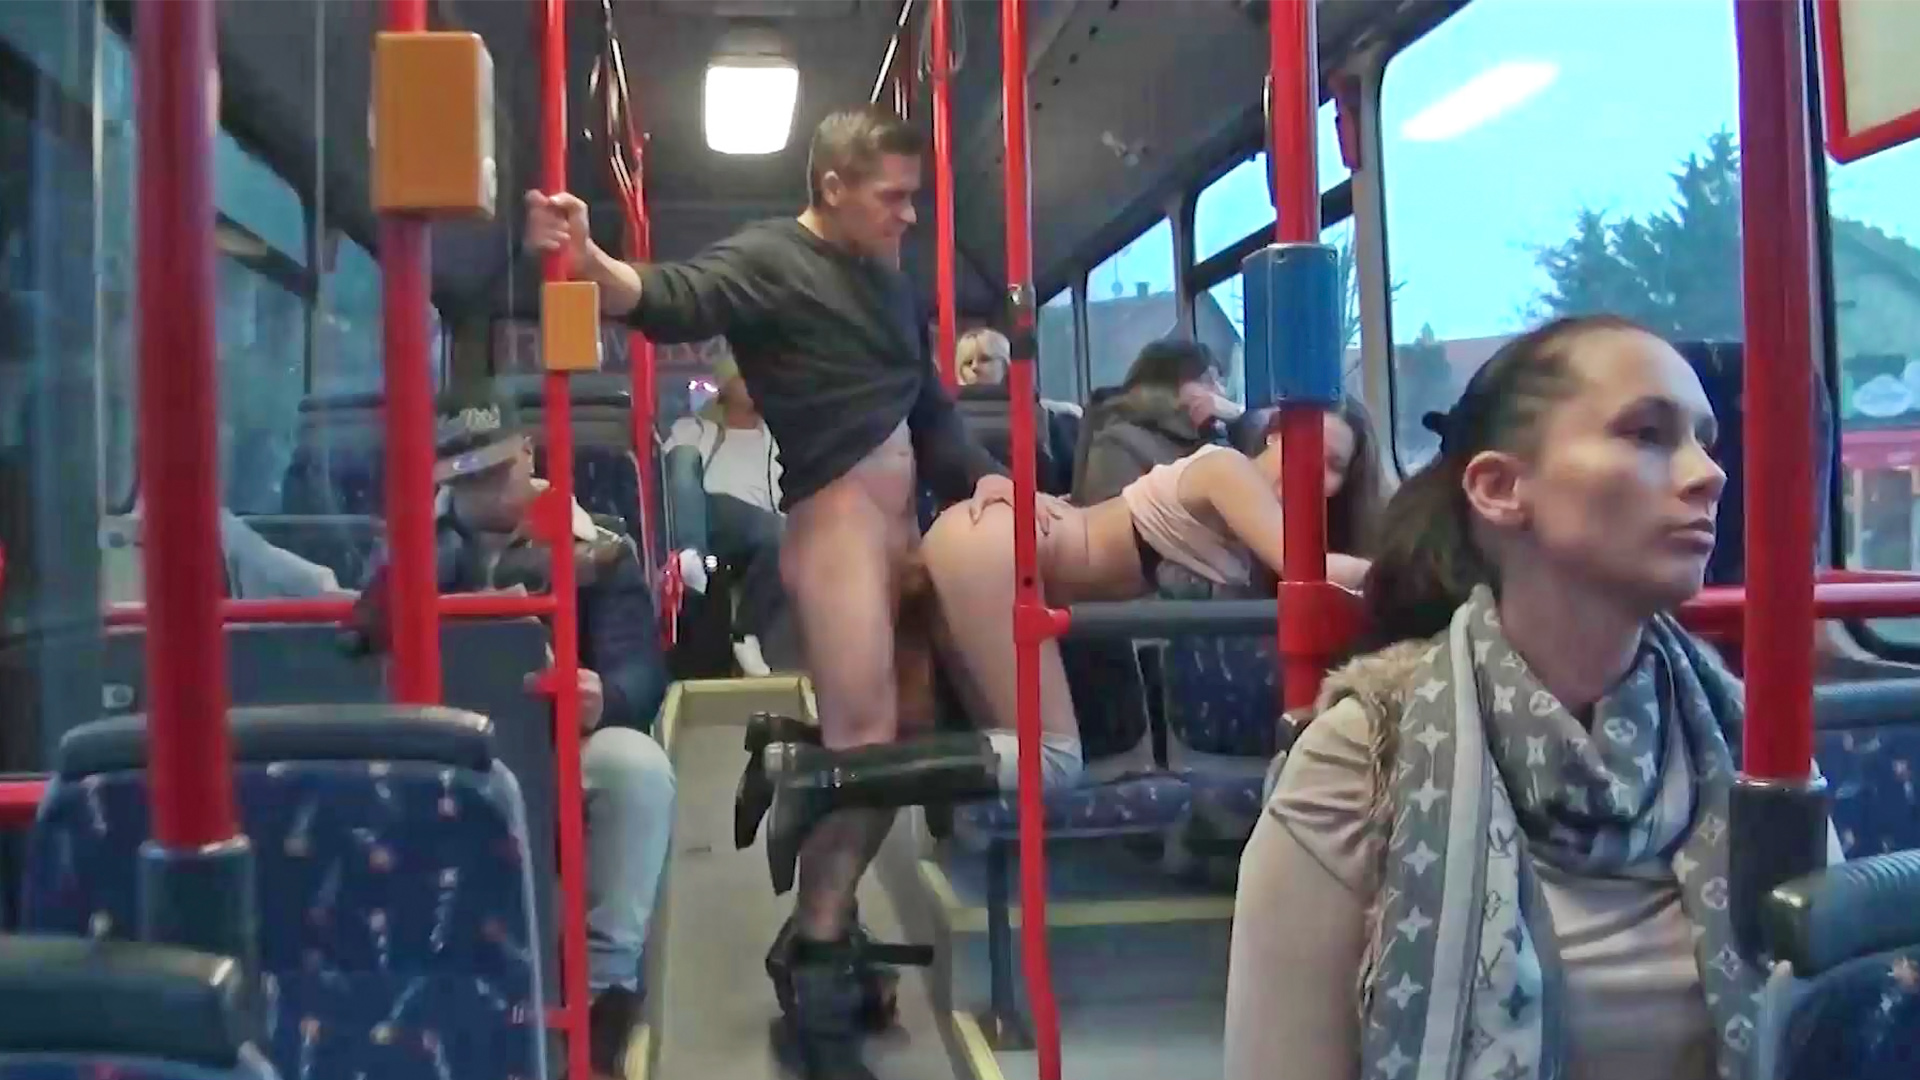 Teens having sex on buses pics